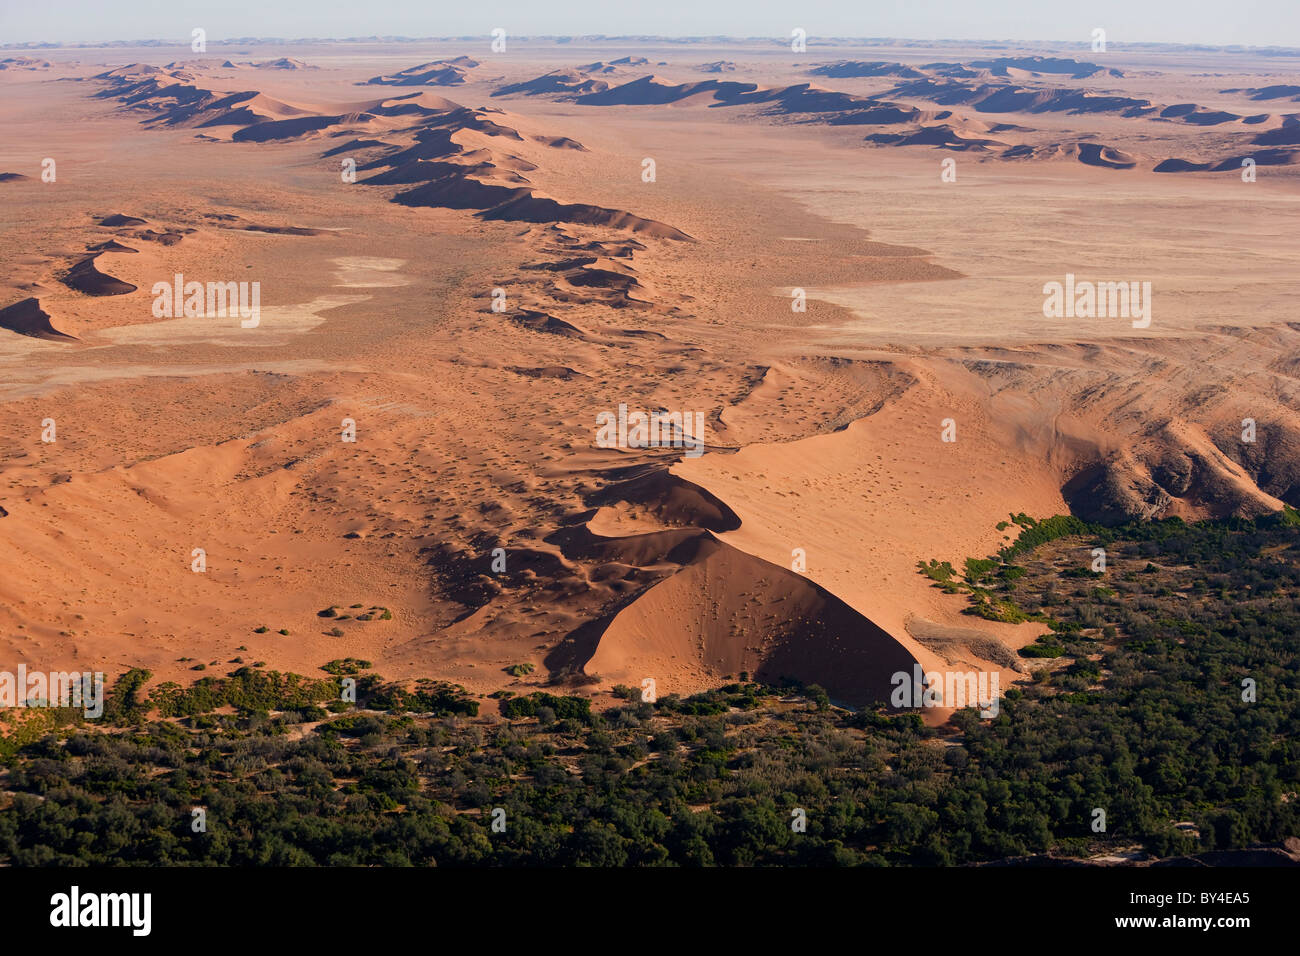 Wüste trifft grüne fruchtbares Land, Luftaufnahme der Namib-Wüste, Namibia Stockfoto